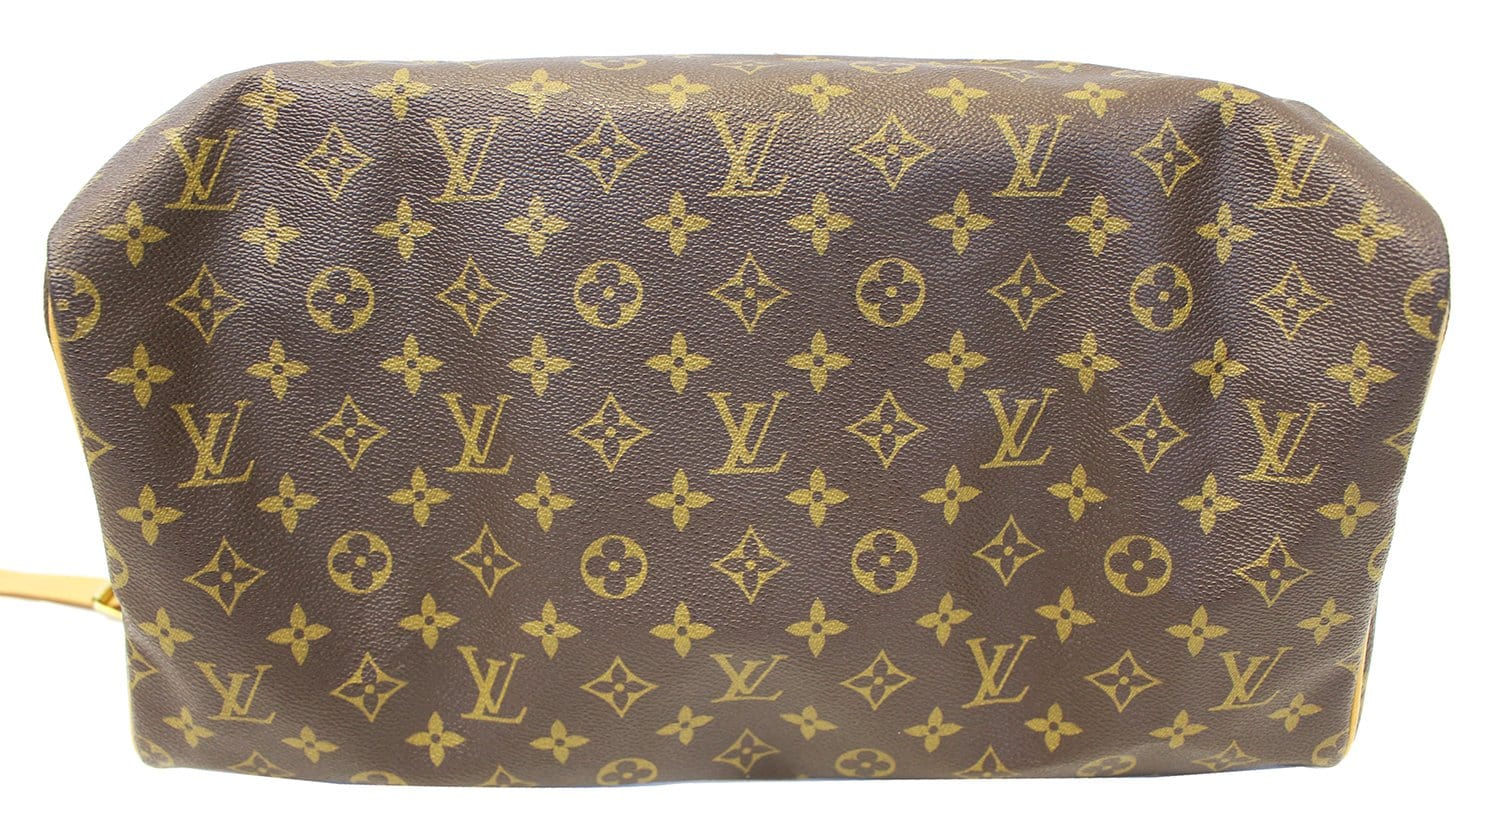 Authentic LOUIS VUITTON Speedy 40 Monogram Boston Handbag Purse #52033